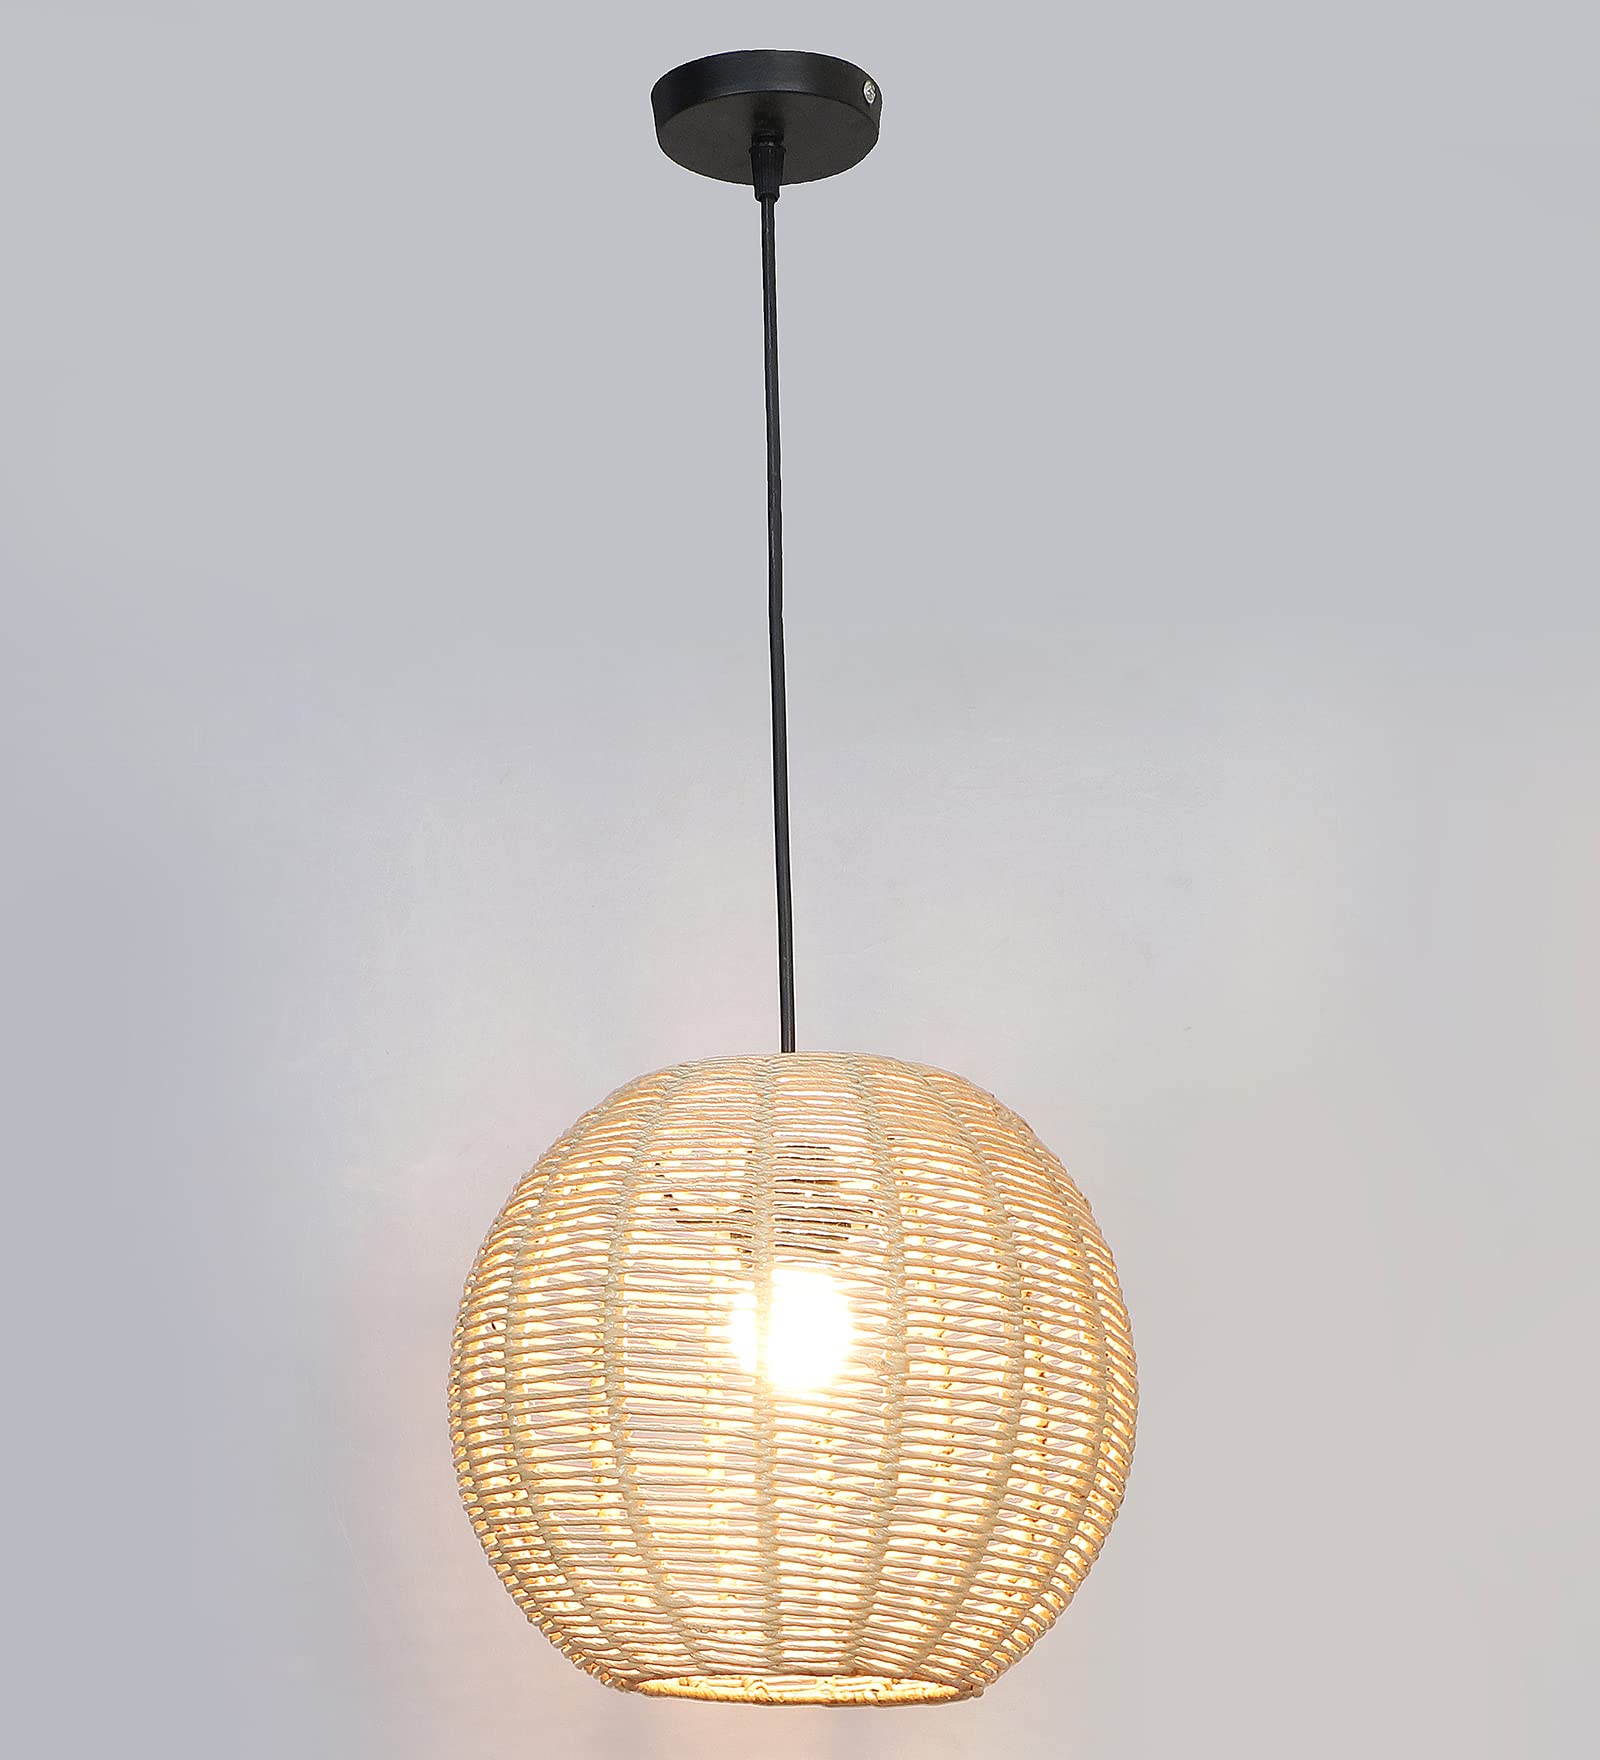 AKWAY Rattan Seagrass Paper Raffia Kauna Grass Wicker Lamp Premium Ceiling Light/Pendant Light Handwoven - 1 Piece (8" Dia x 8'H) (Beige) (Bulb not Included) - Akway